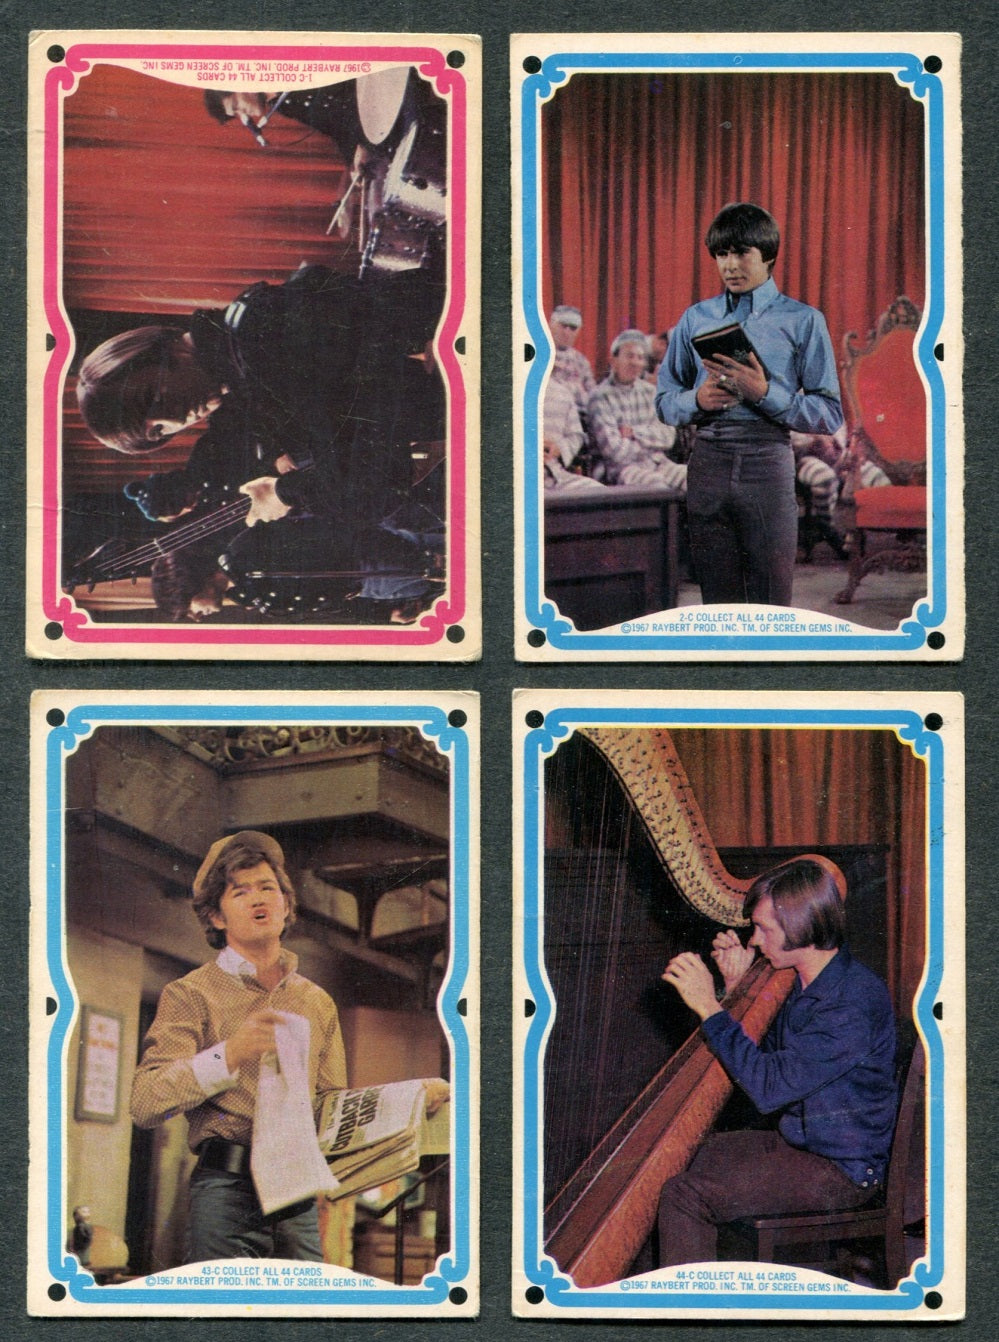 1966 Donruss The Monkees Complete Series C Set (44) VG/EX